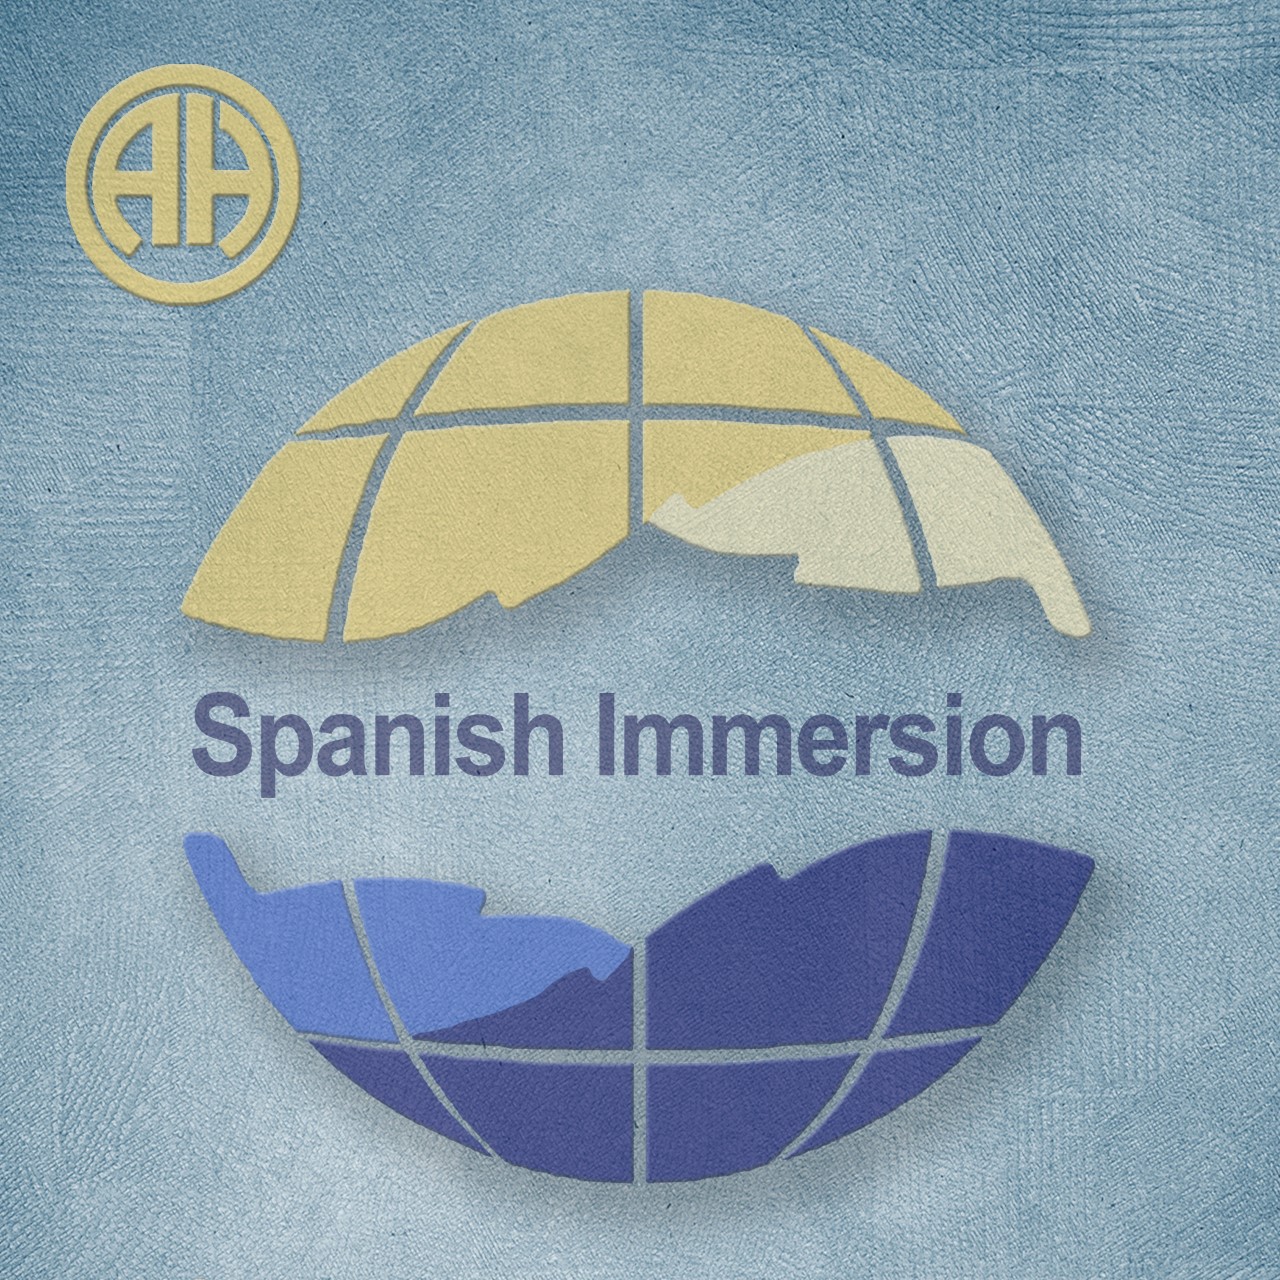 Spanish Immersion